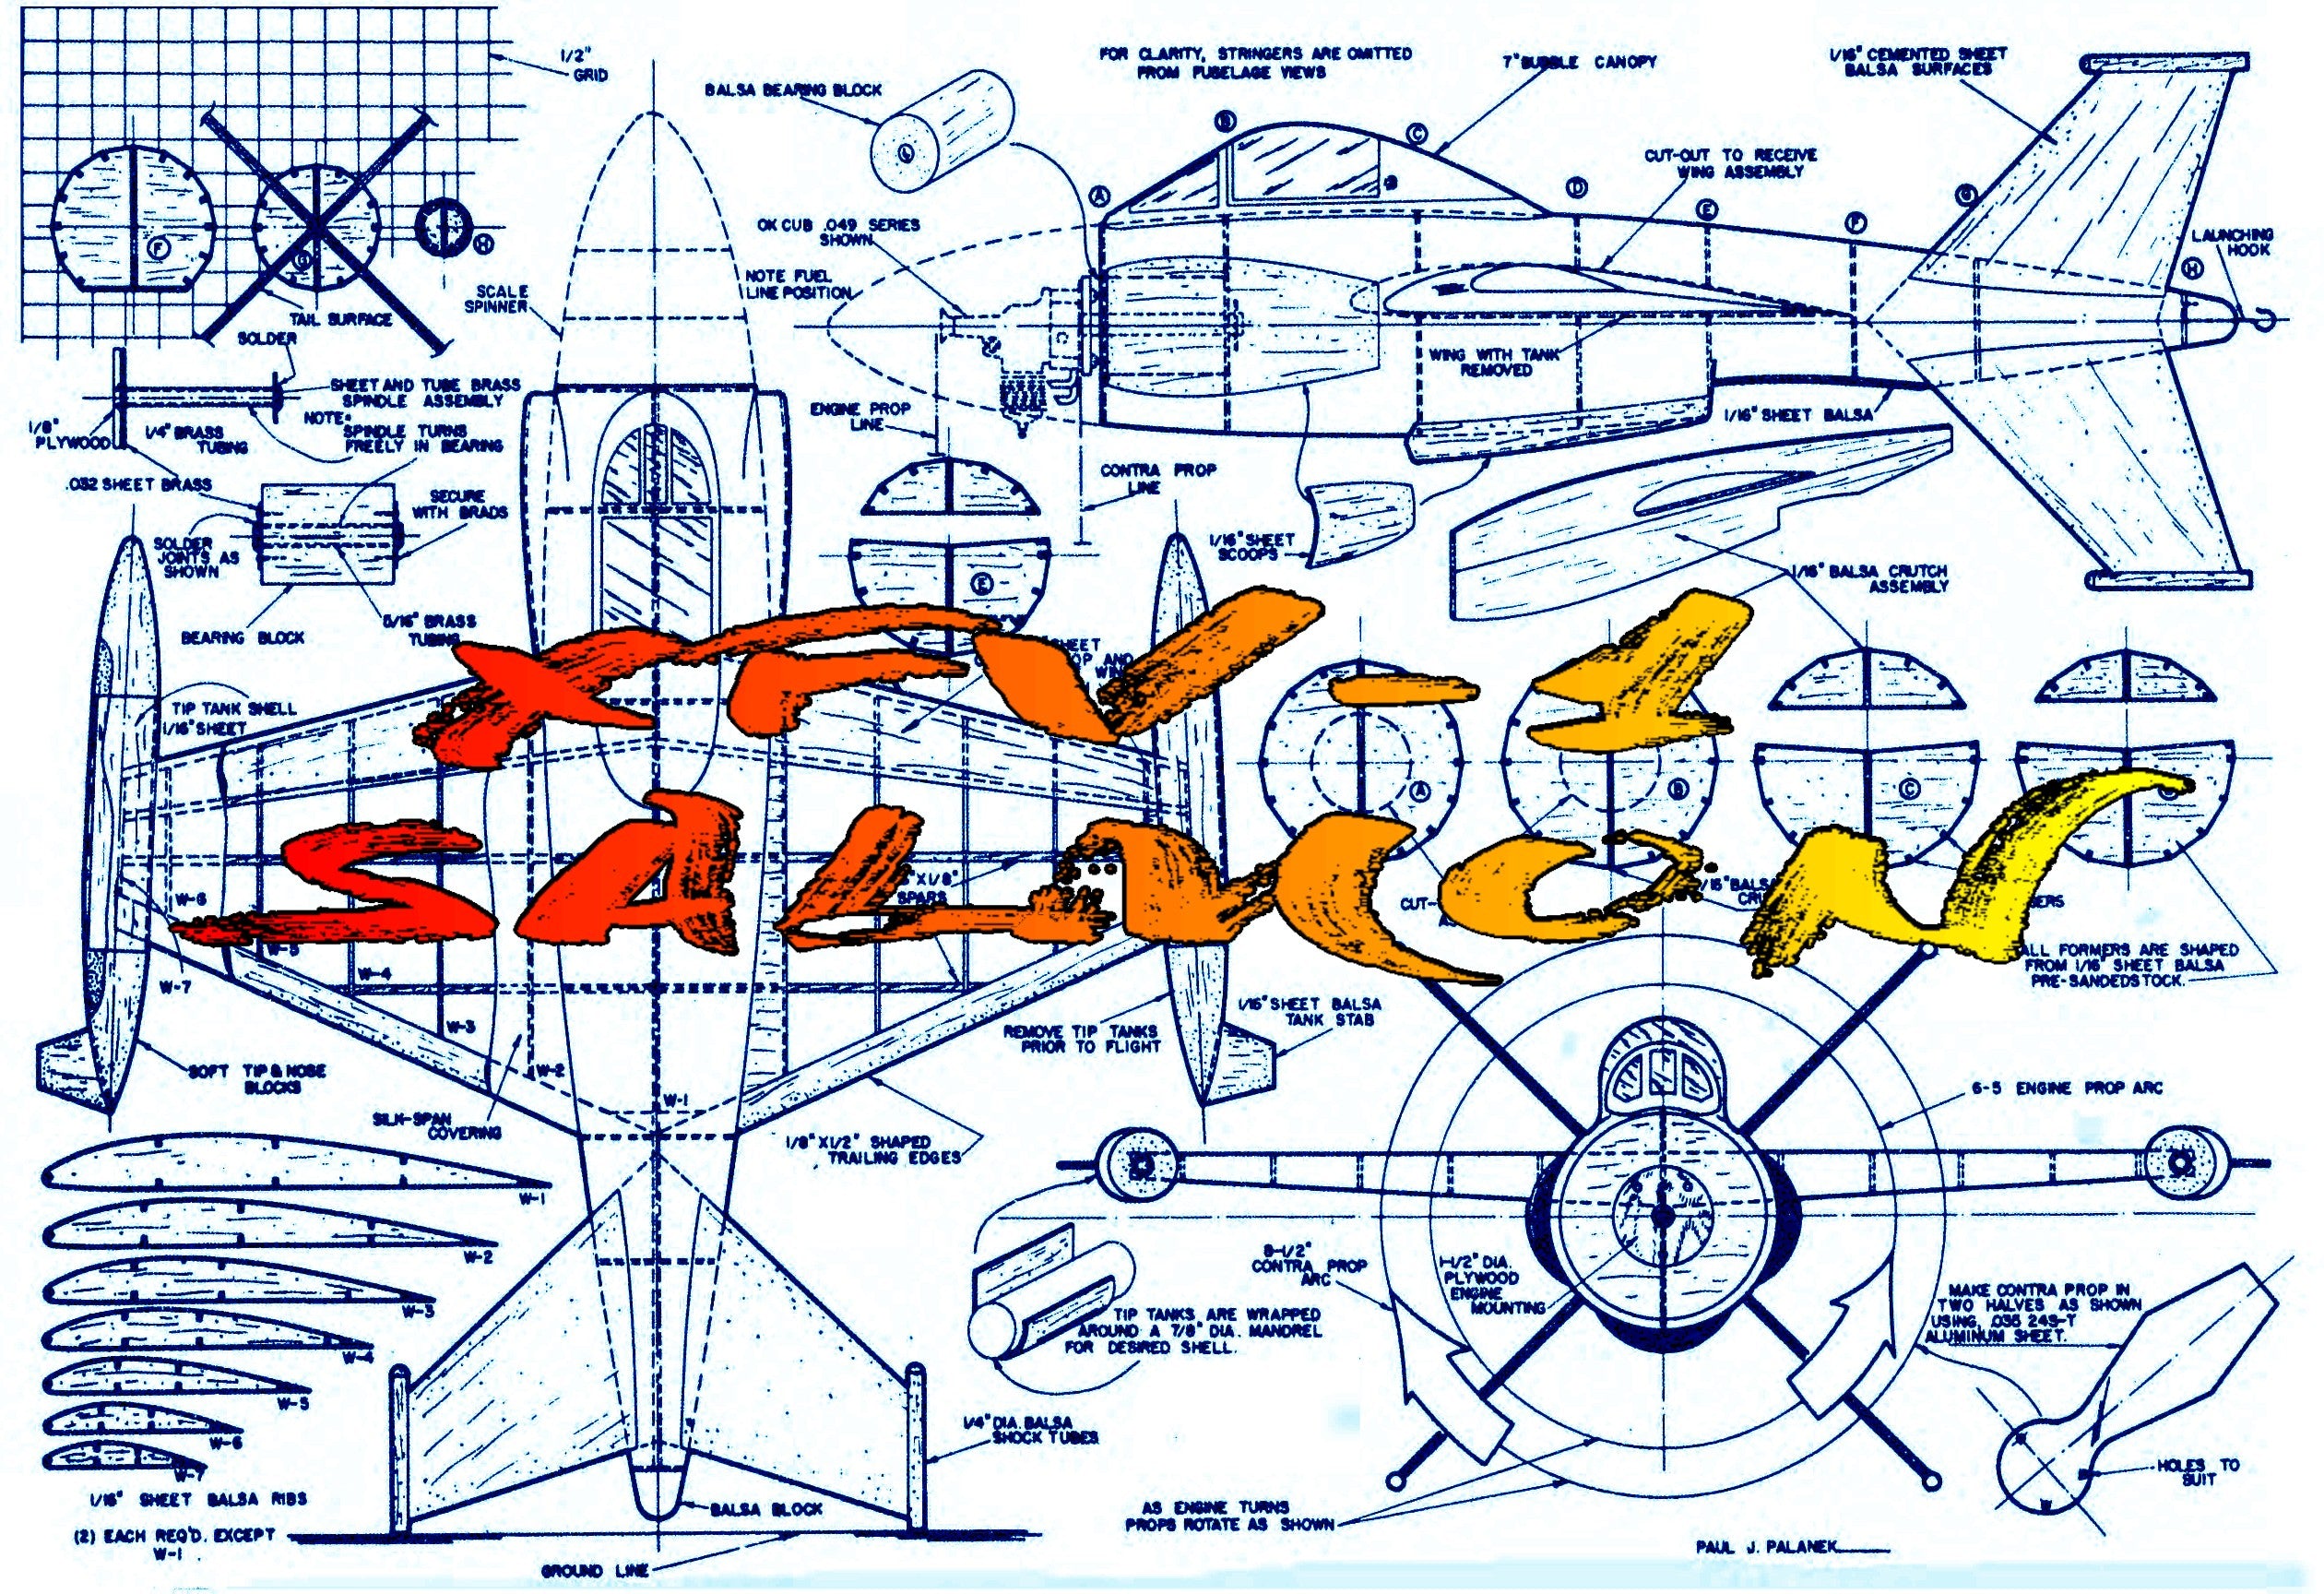 full size printed plan semi-scale lockheed xfv-1plane that takes off vertically.